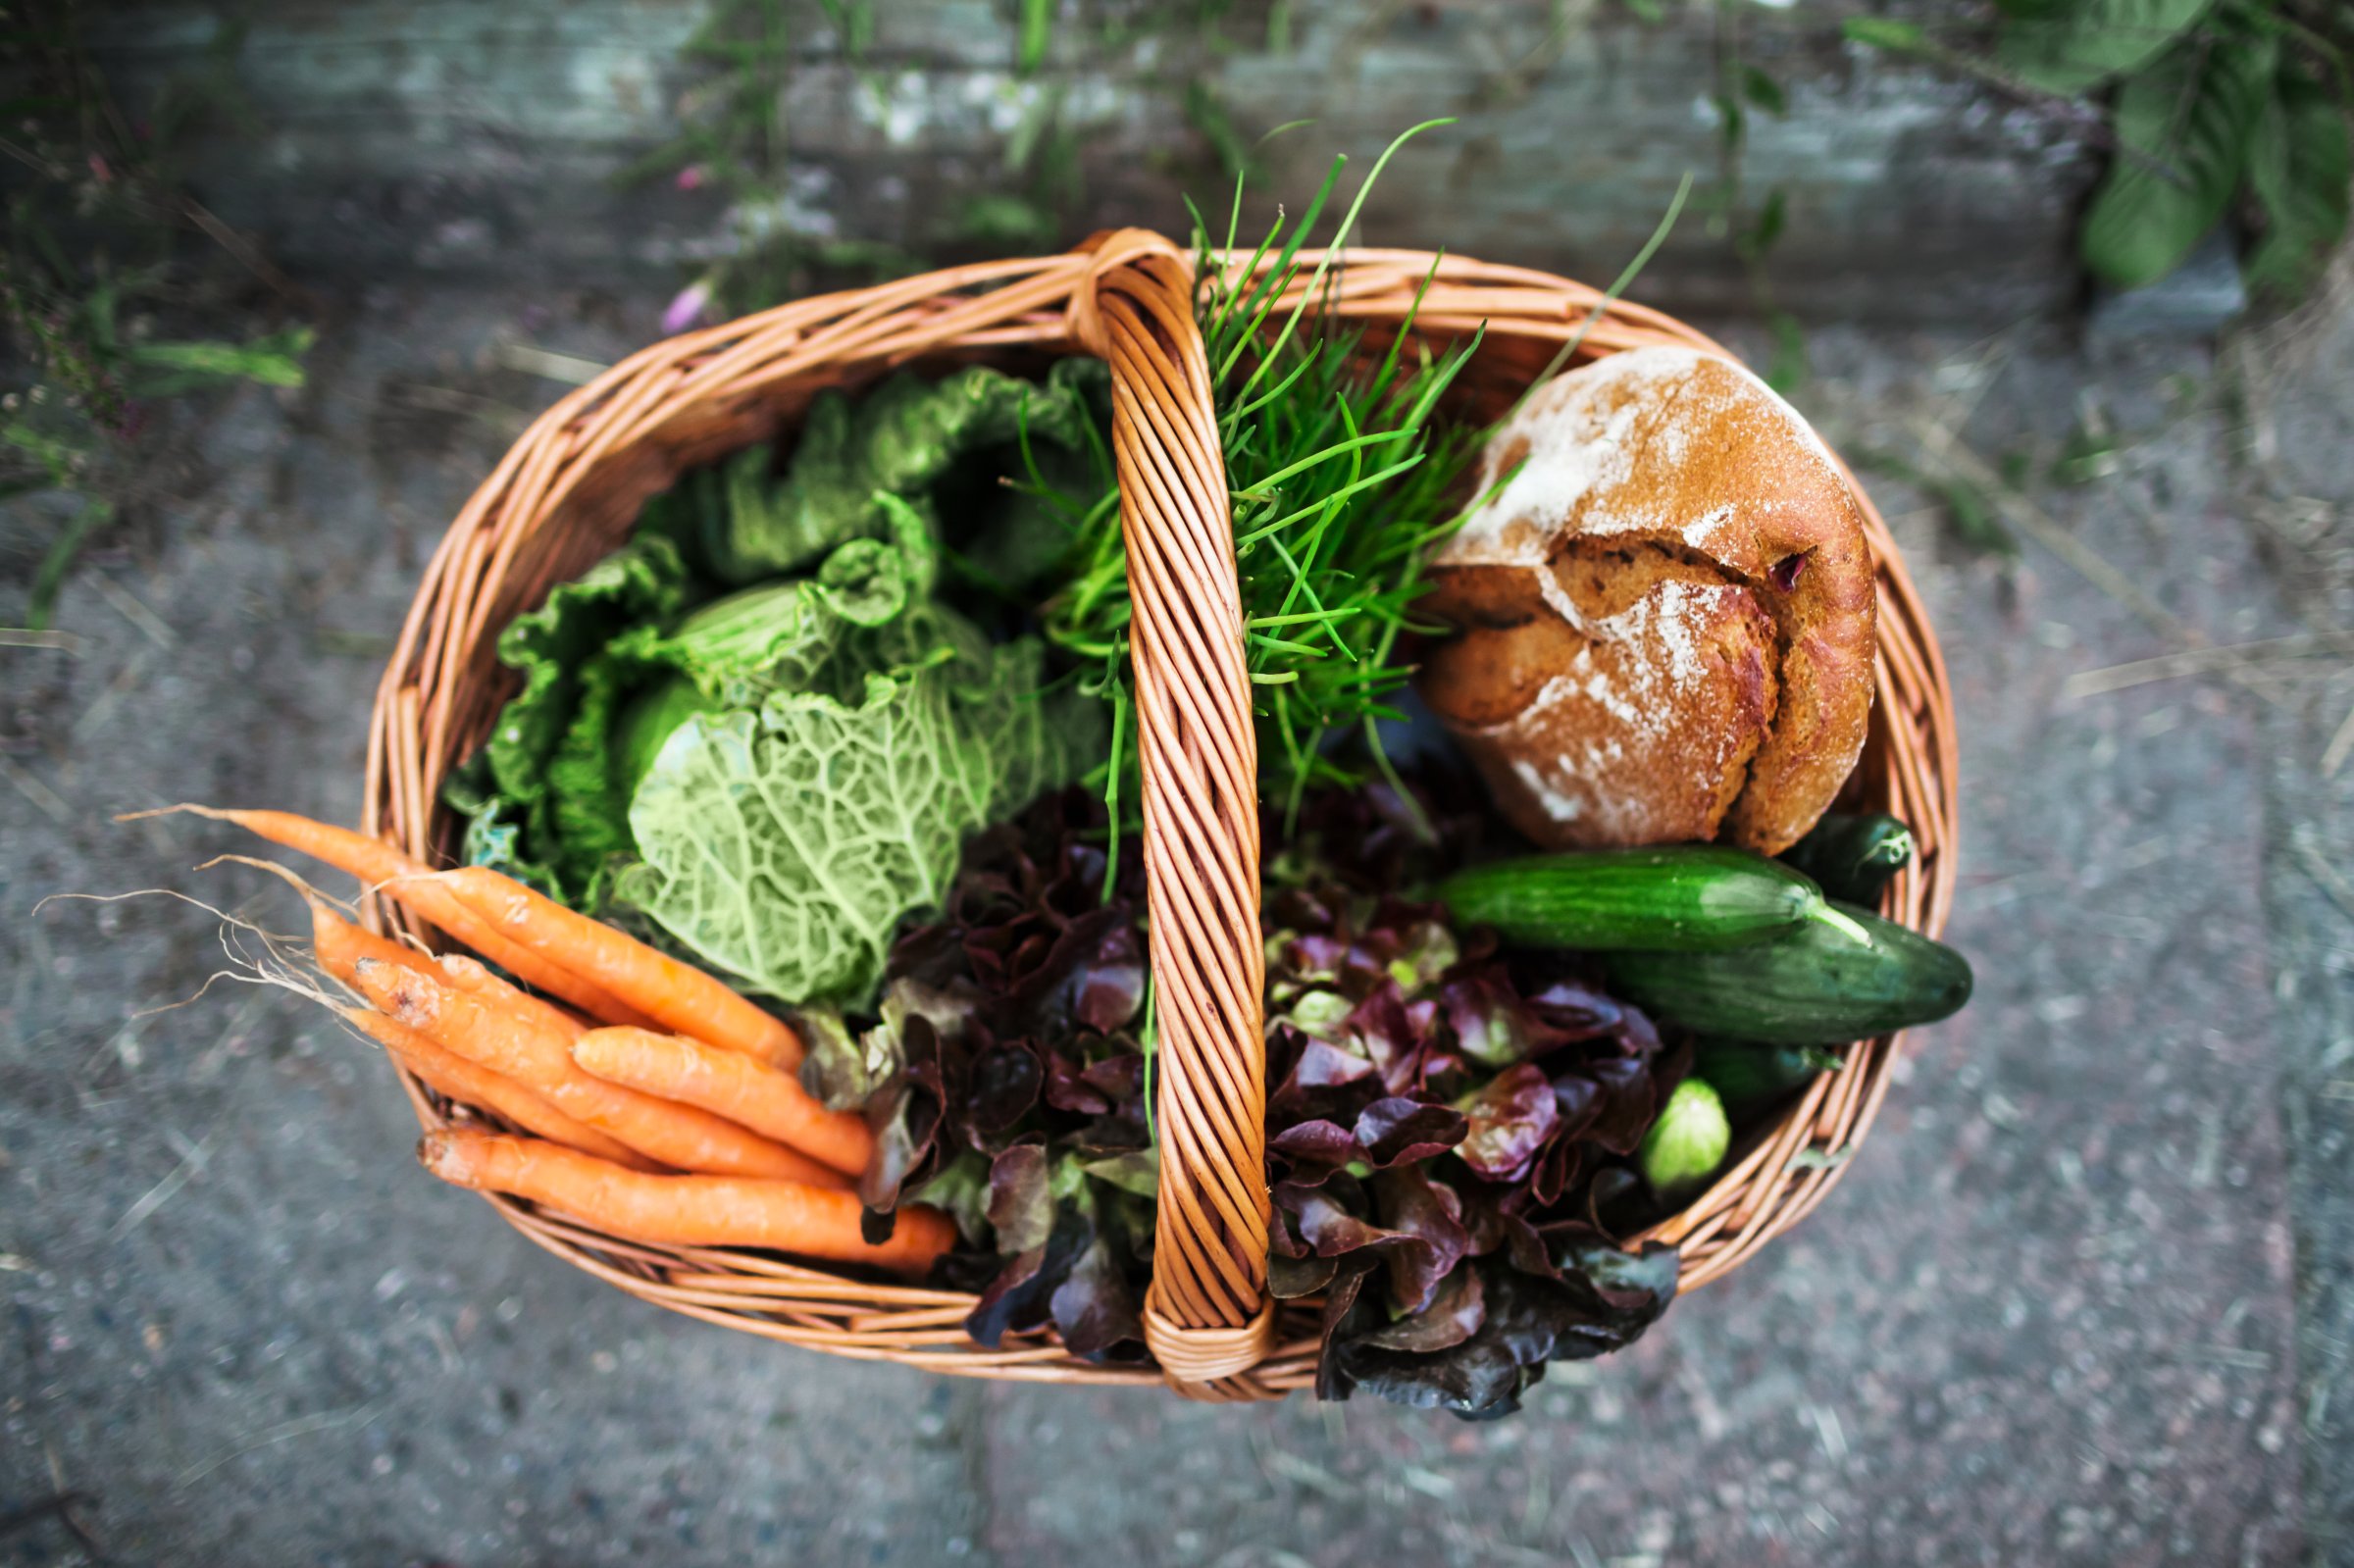 Fresh Vegetable And Food in Basket